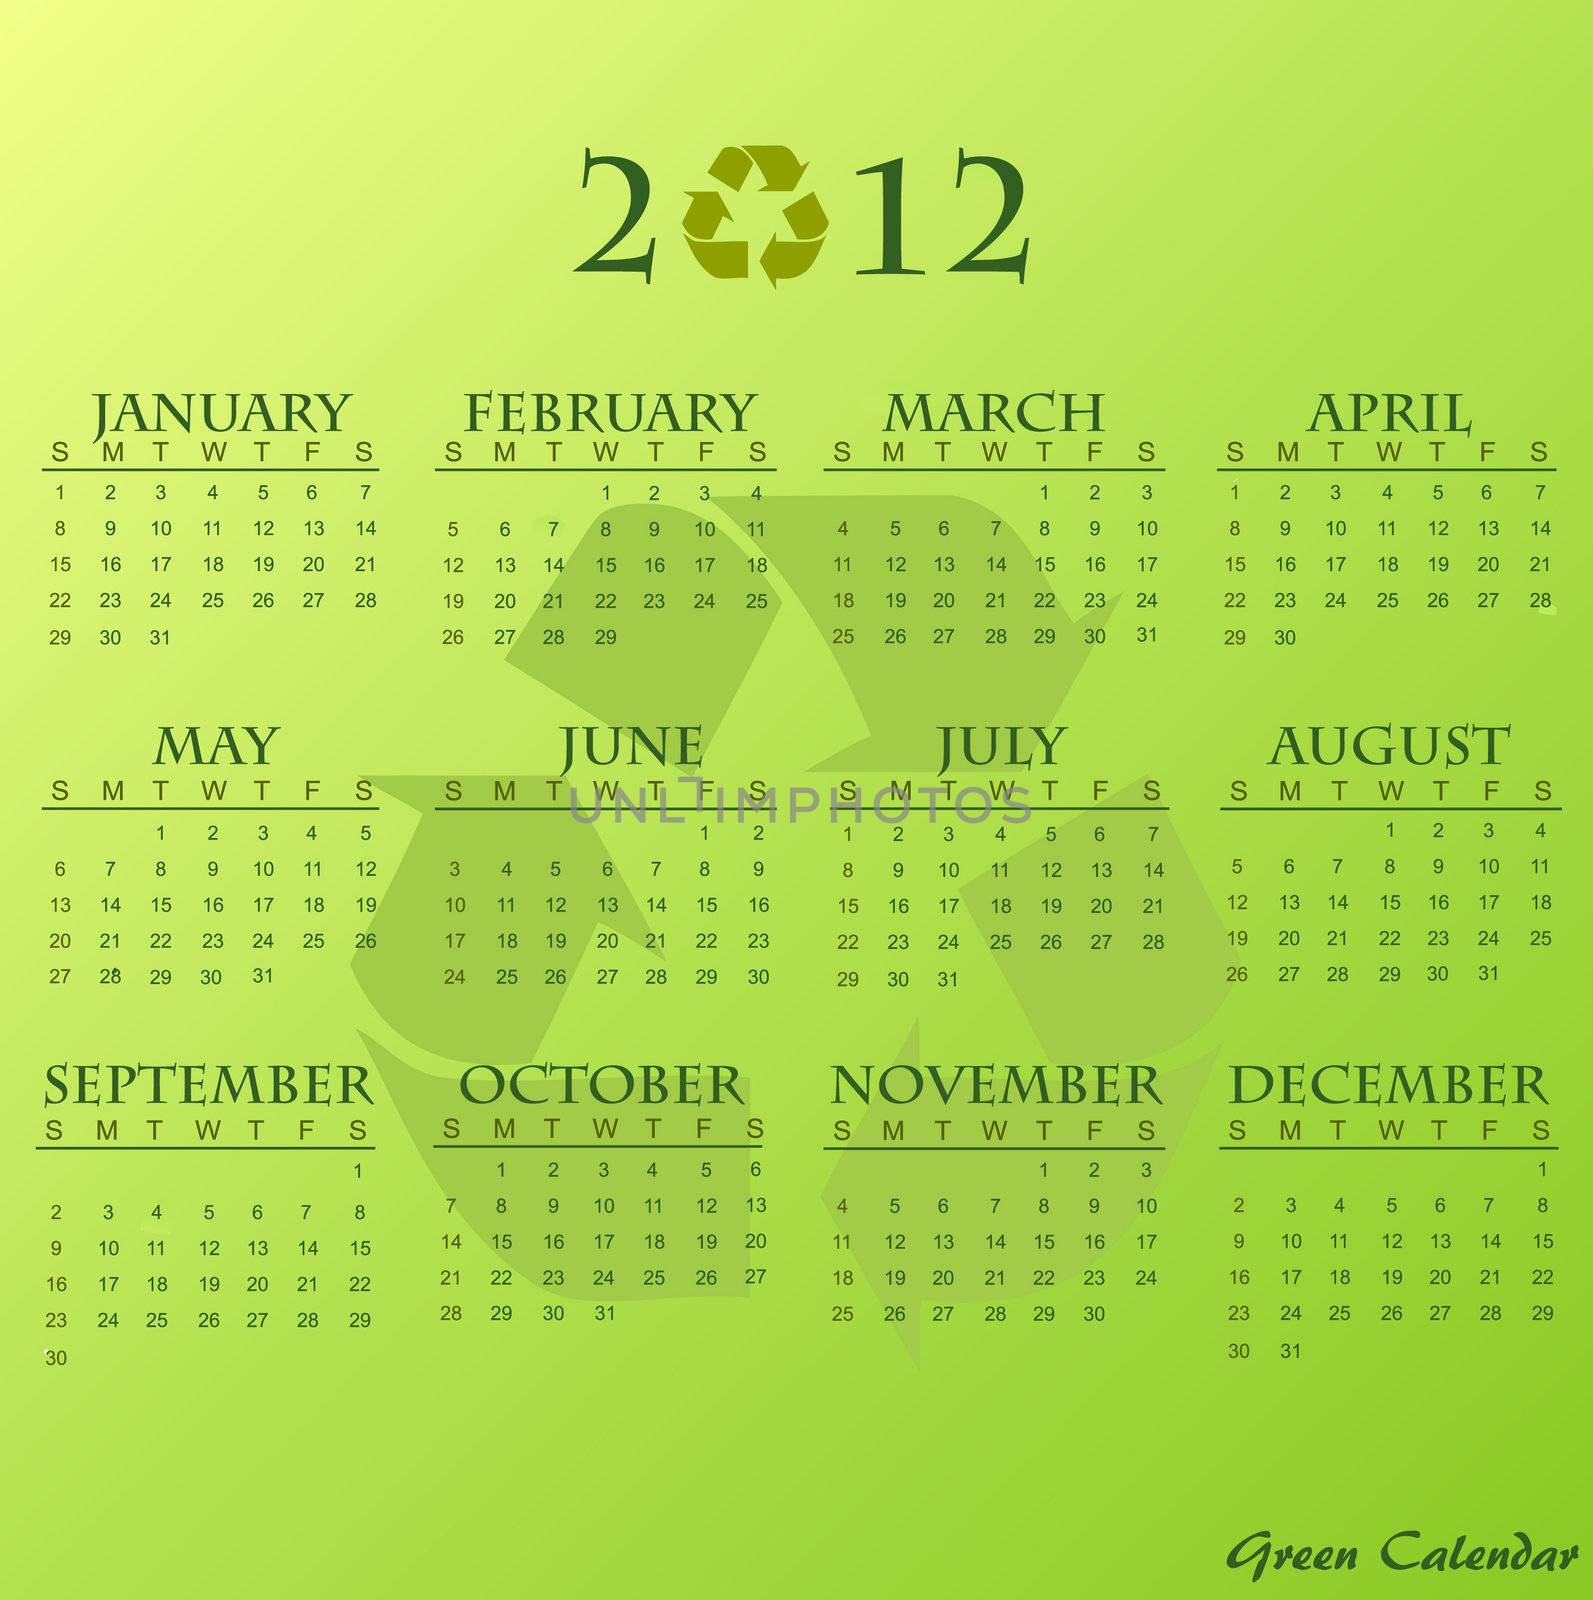 2012 Green Calendar by nmarques74